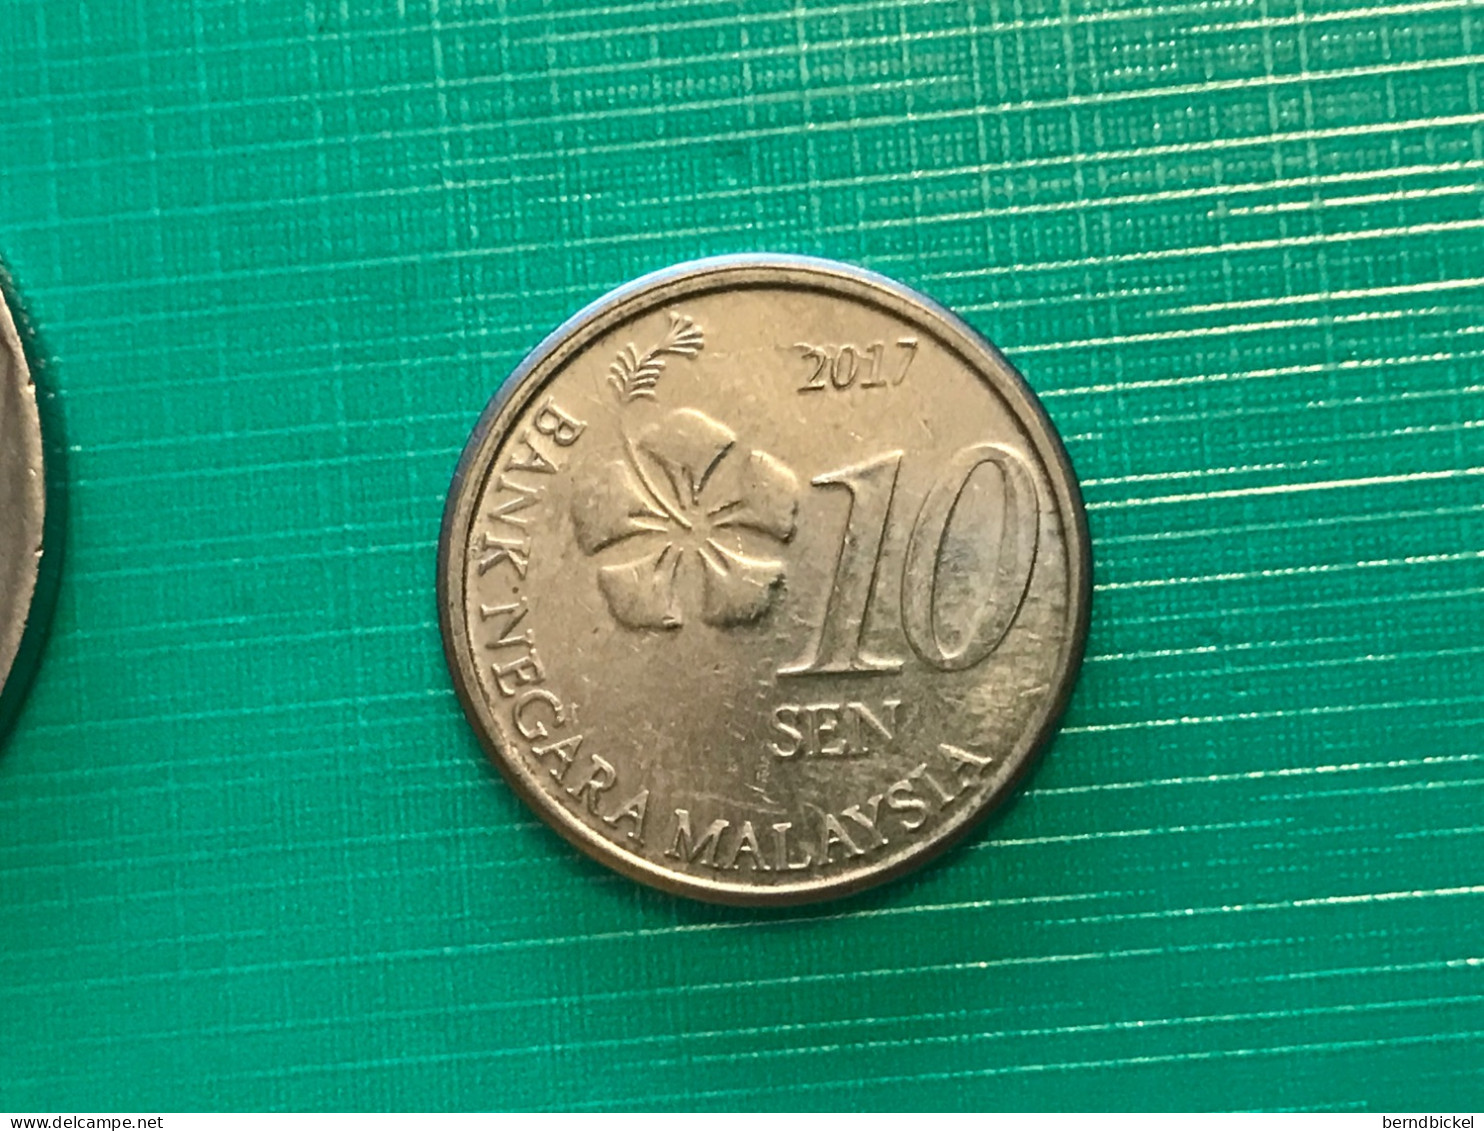 Münze Münzen Umlaufmünze Malaysia 10 Sen 2017 - Malesia